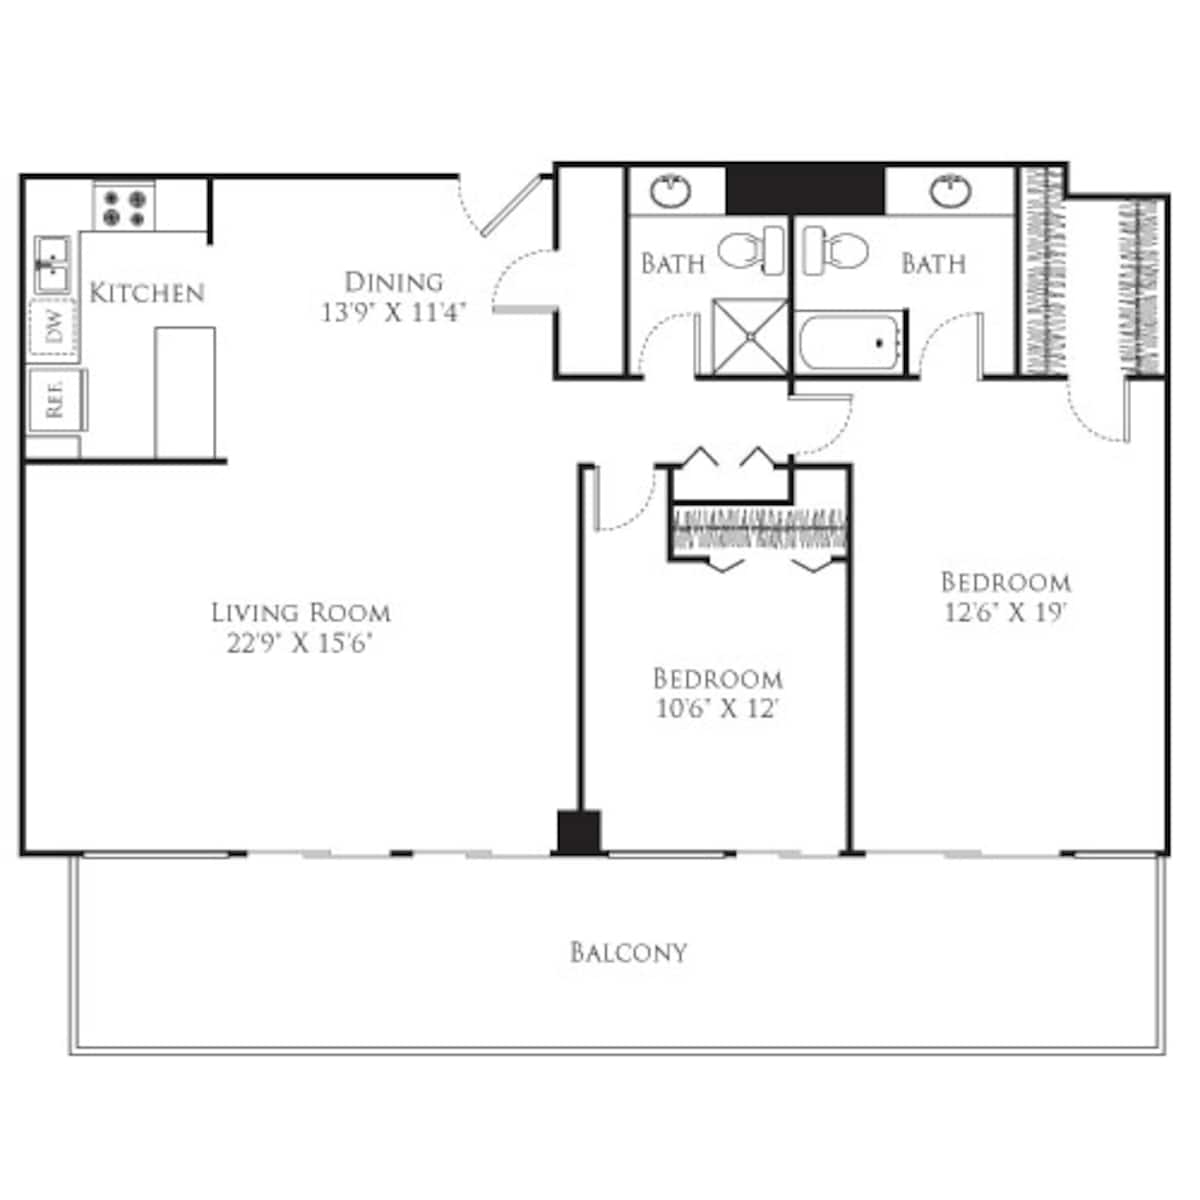 Floorplan diagram for 2 Bedroom - Tower, showing 2 bedroom